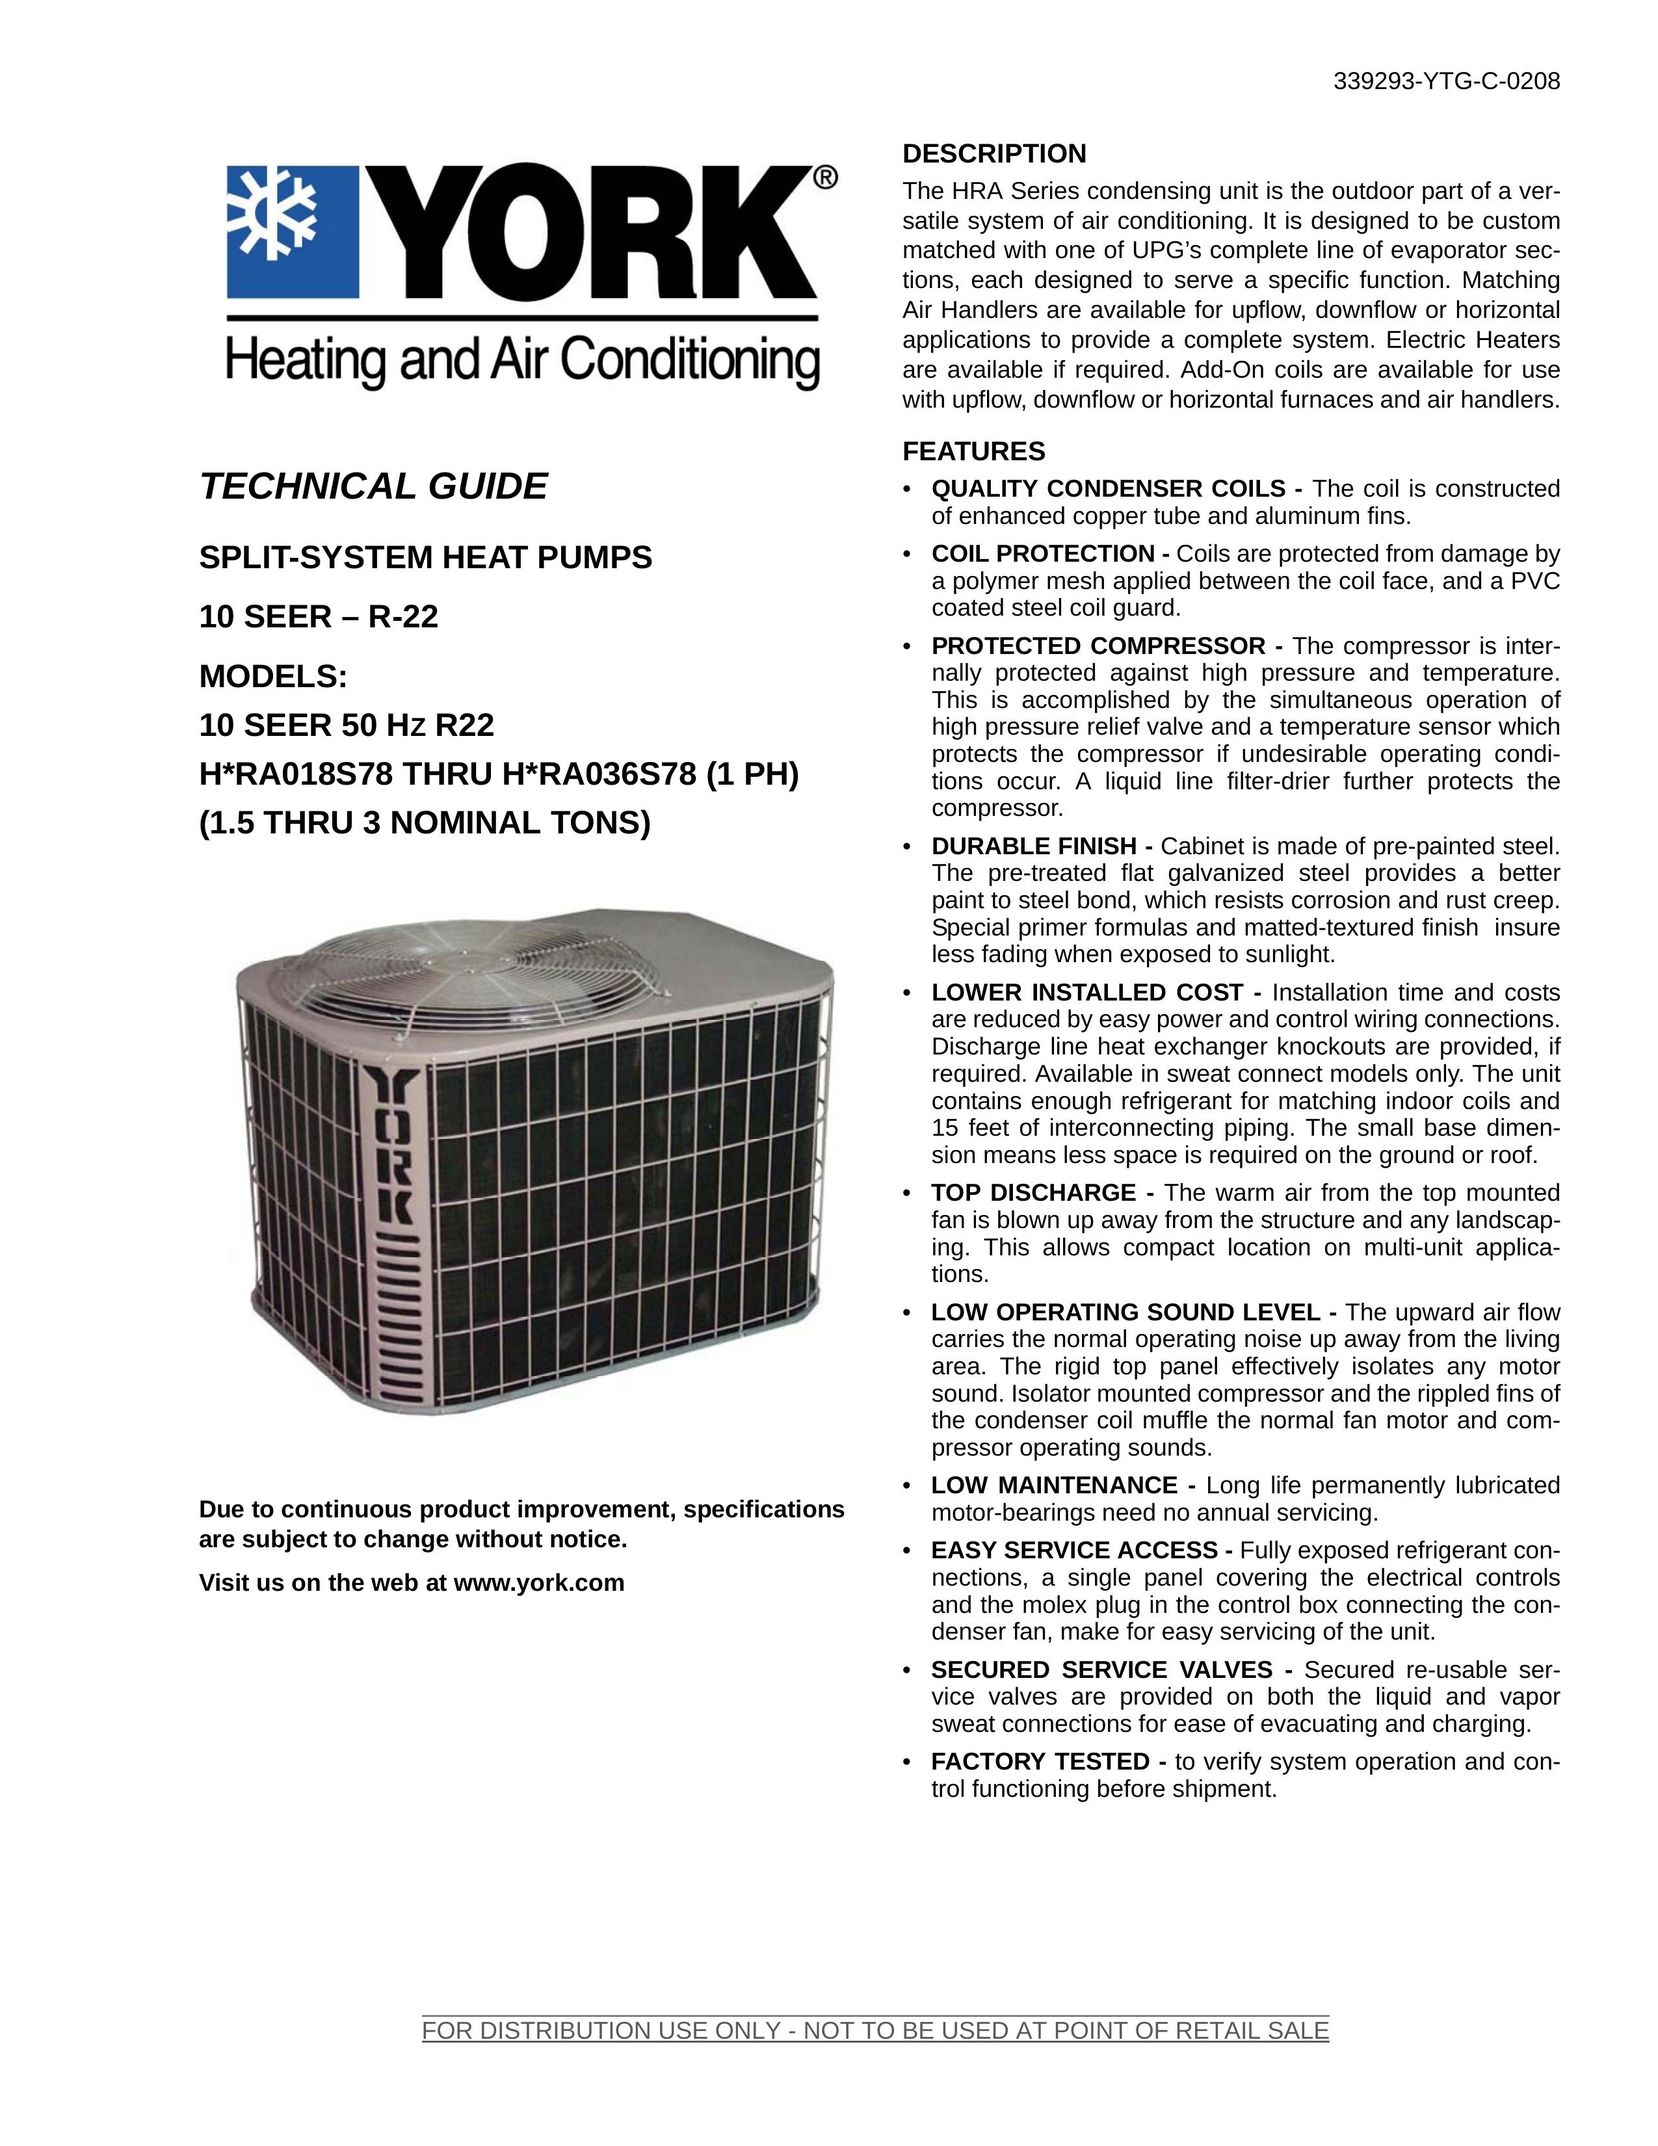 York 10 SEER 50HZ R22 Air Conditioner User Manual